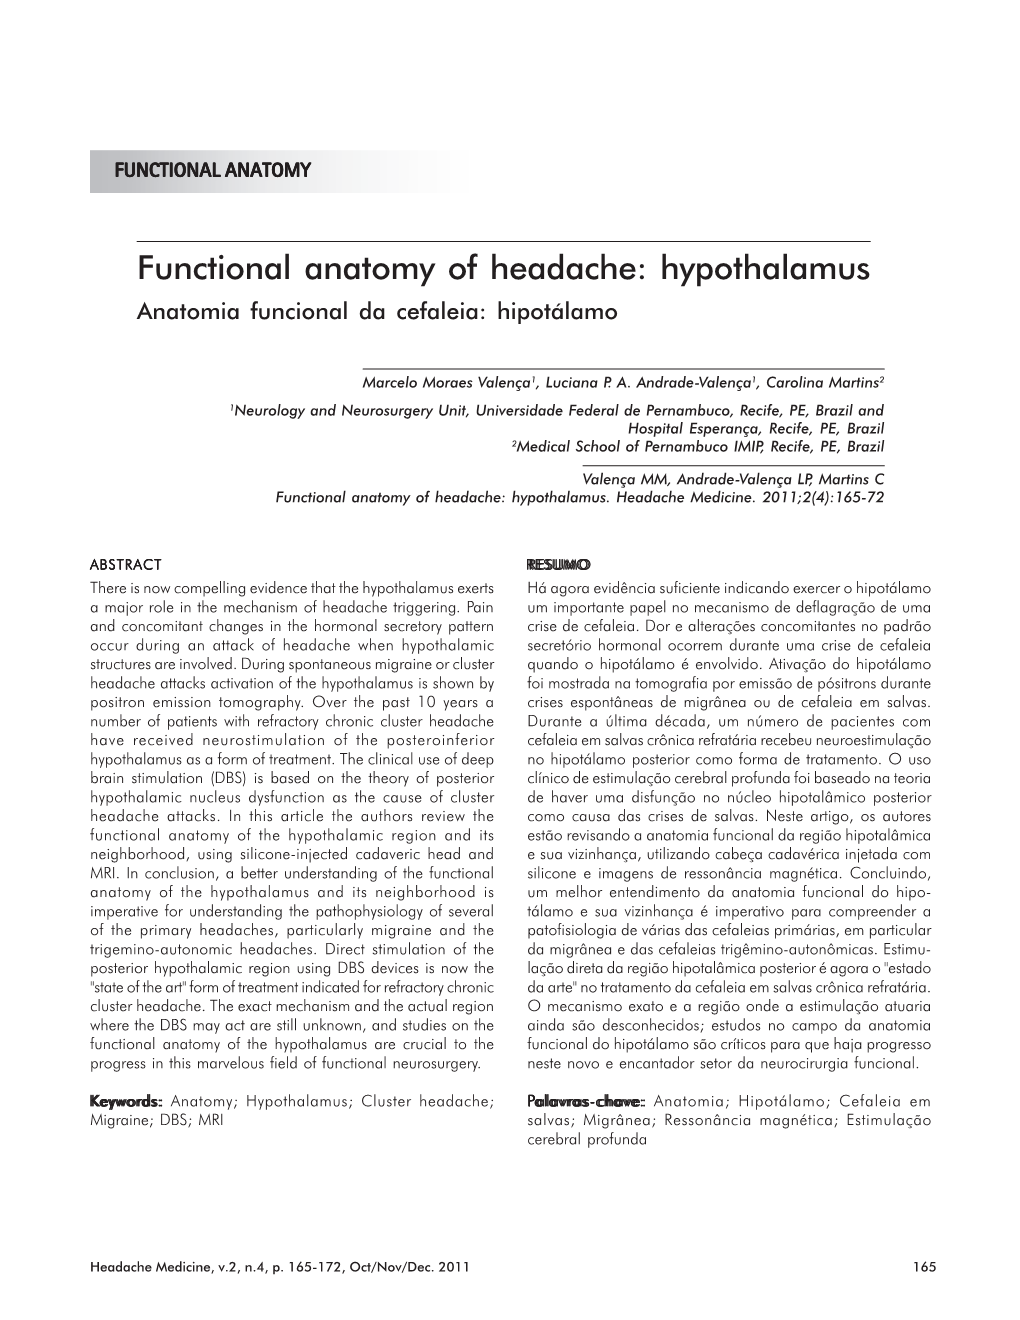 Functional Anatomy of Headache: Hypothalamus Anatomia Funcional Da Cefaleia: Hipotálamo